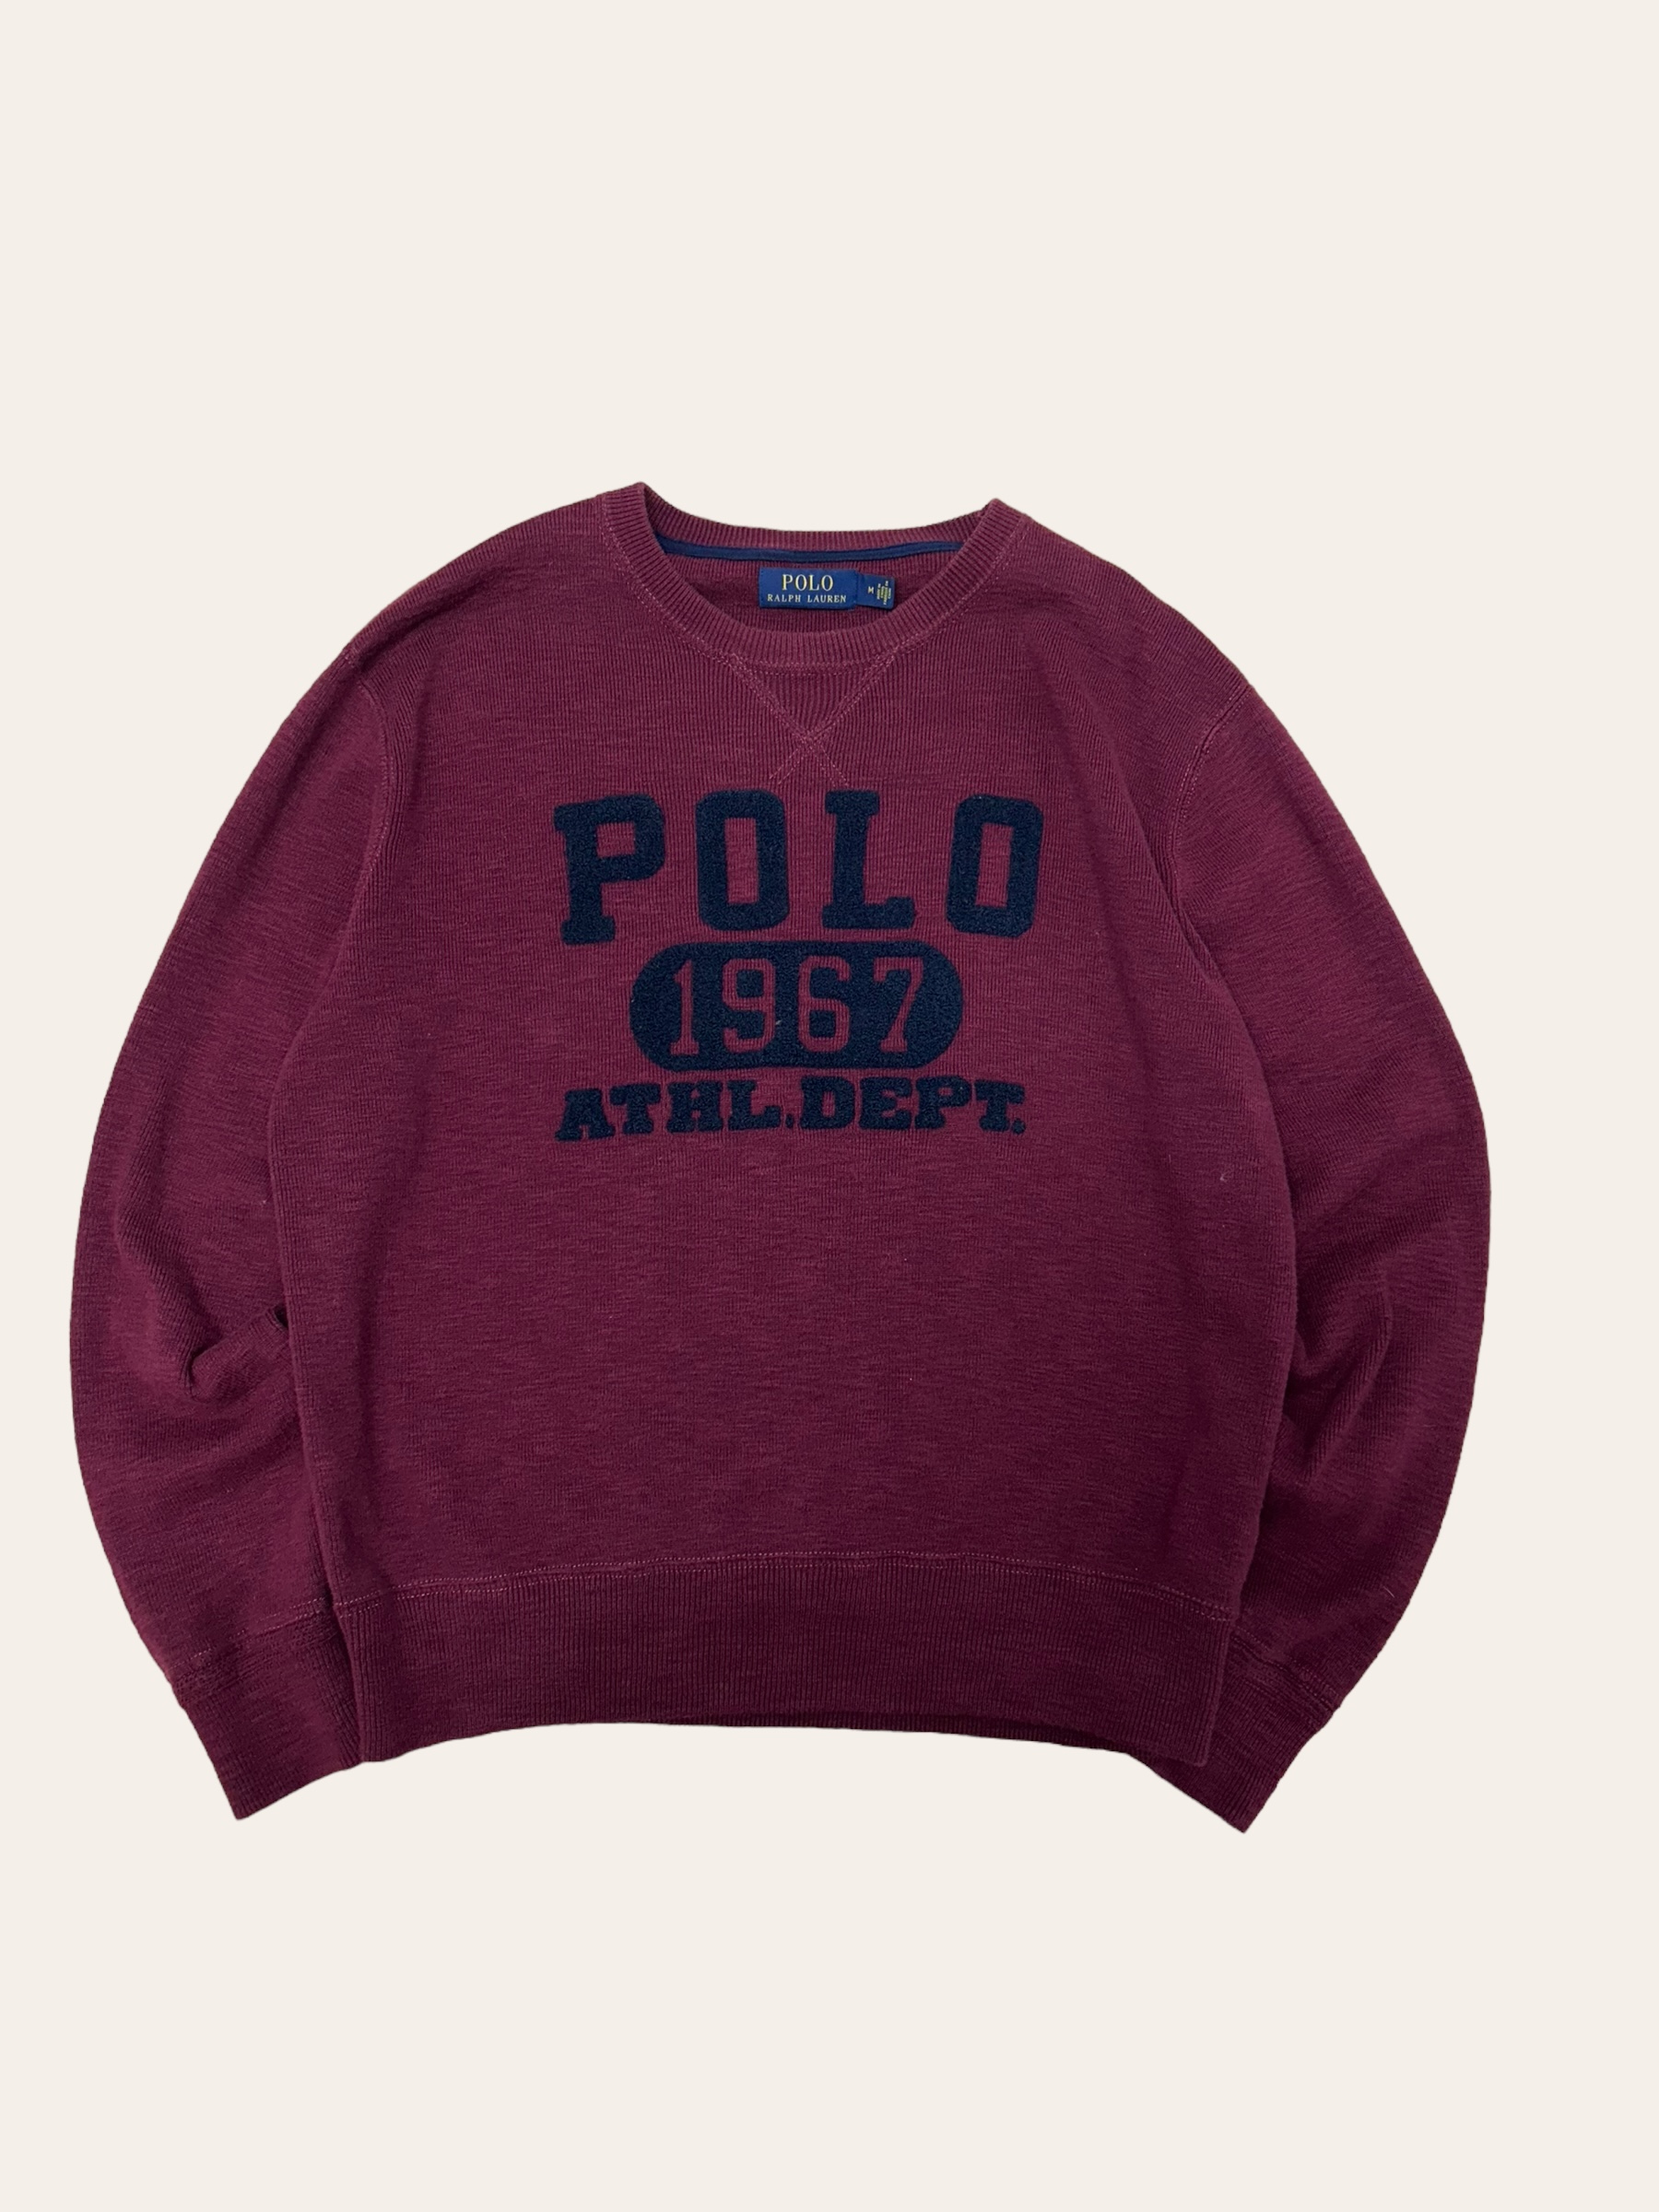 Polo ralph lauren burgundy logo sweatshirt M